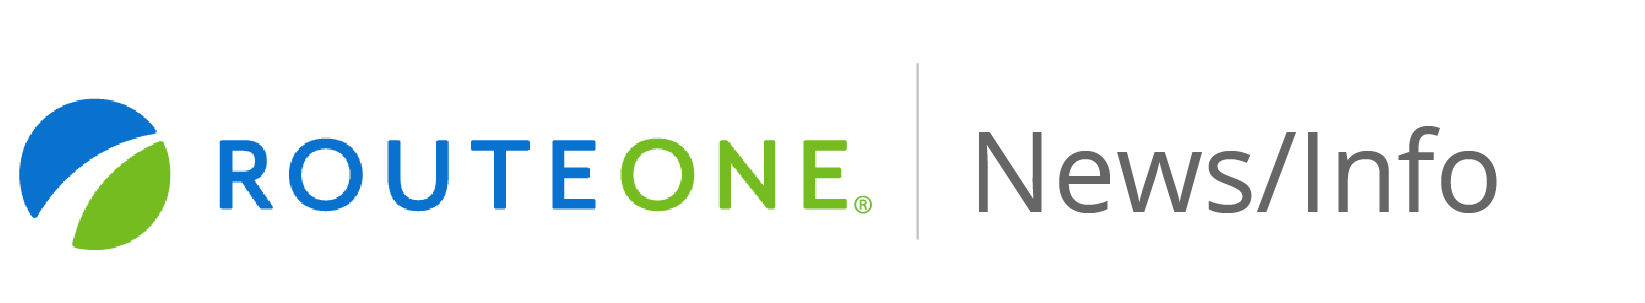 RouteOne News/Info logo